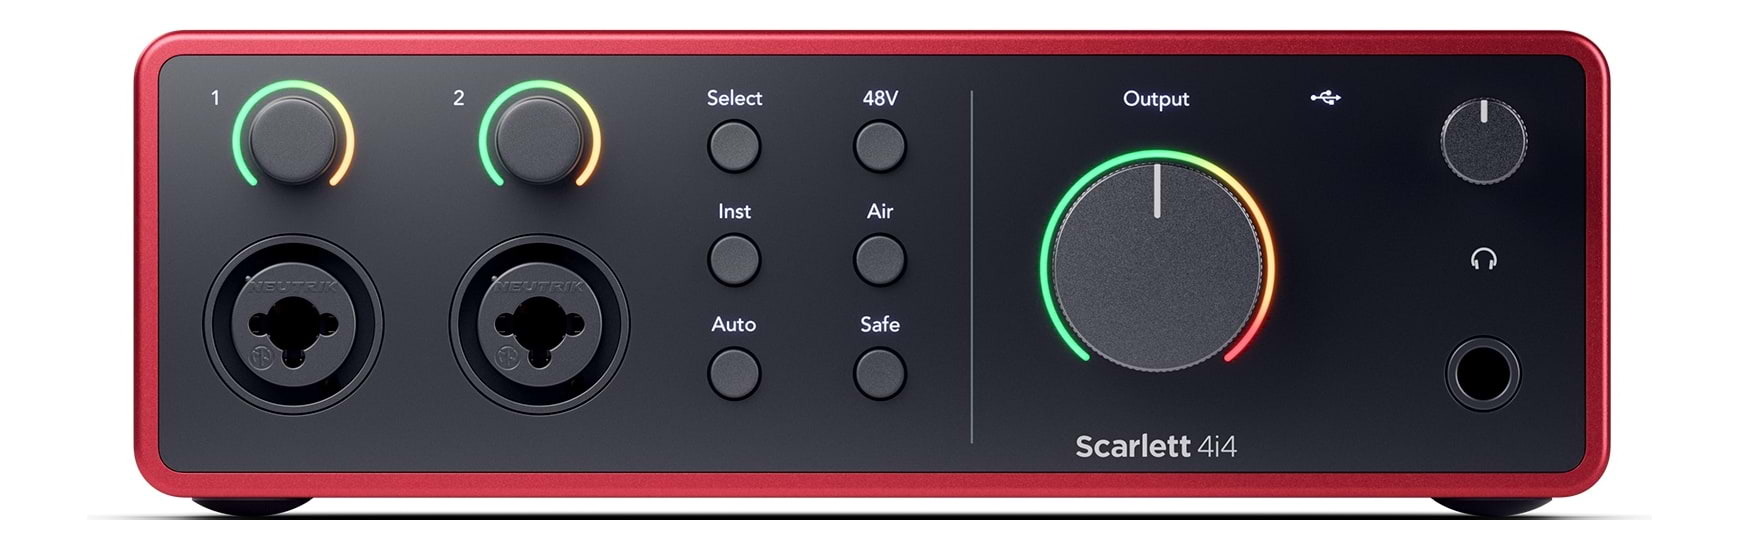 Focusrite Scarlett Solo 4th Gen USB Audio Interface Nigeria